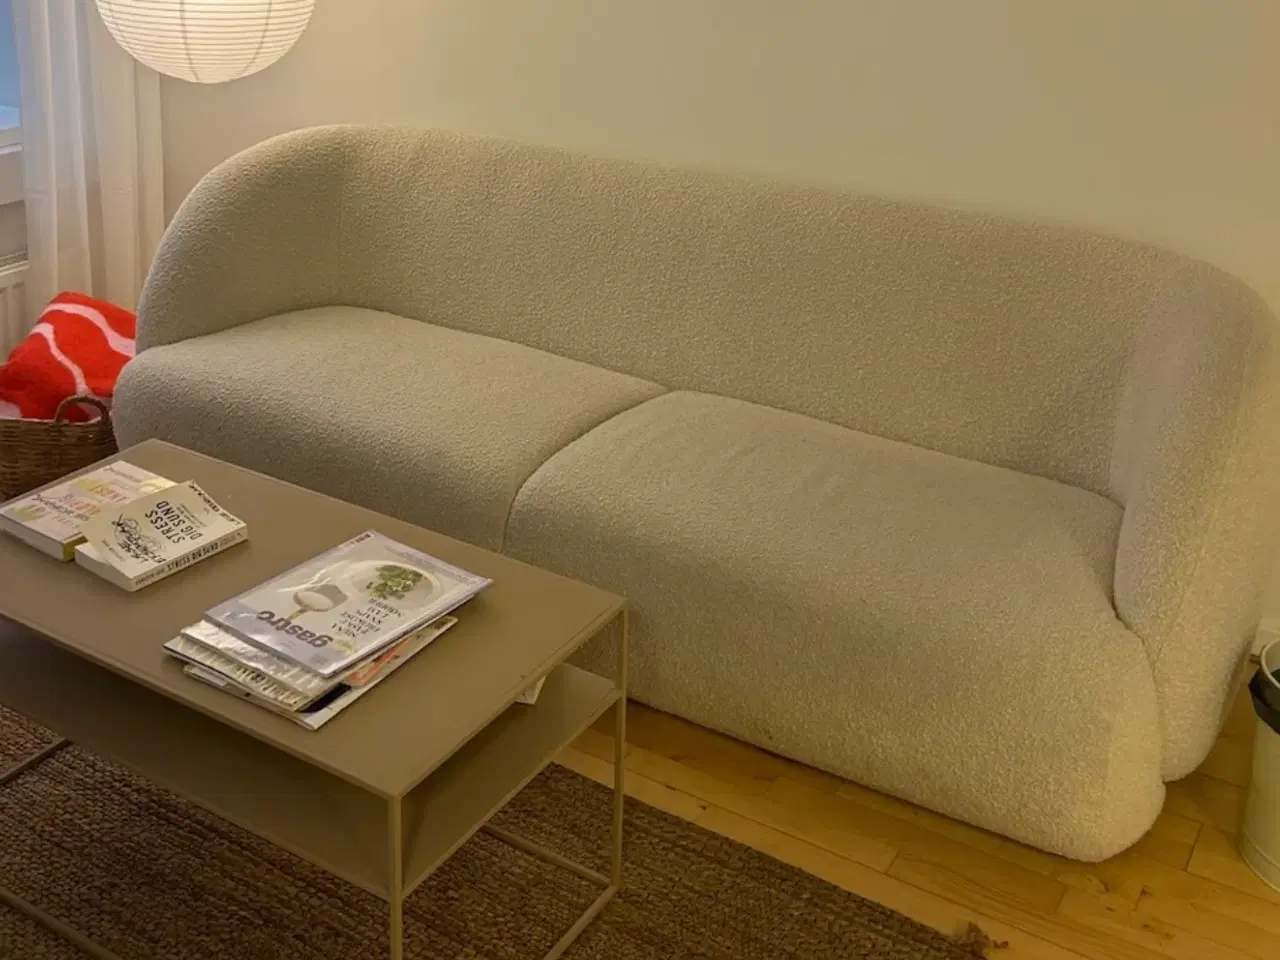 Billede 1 - 3 pers sofa fra sofacompany